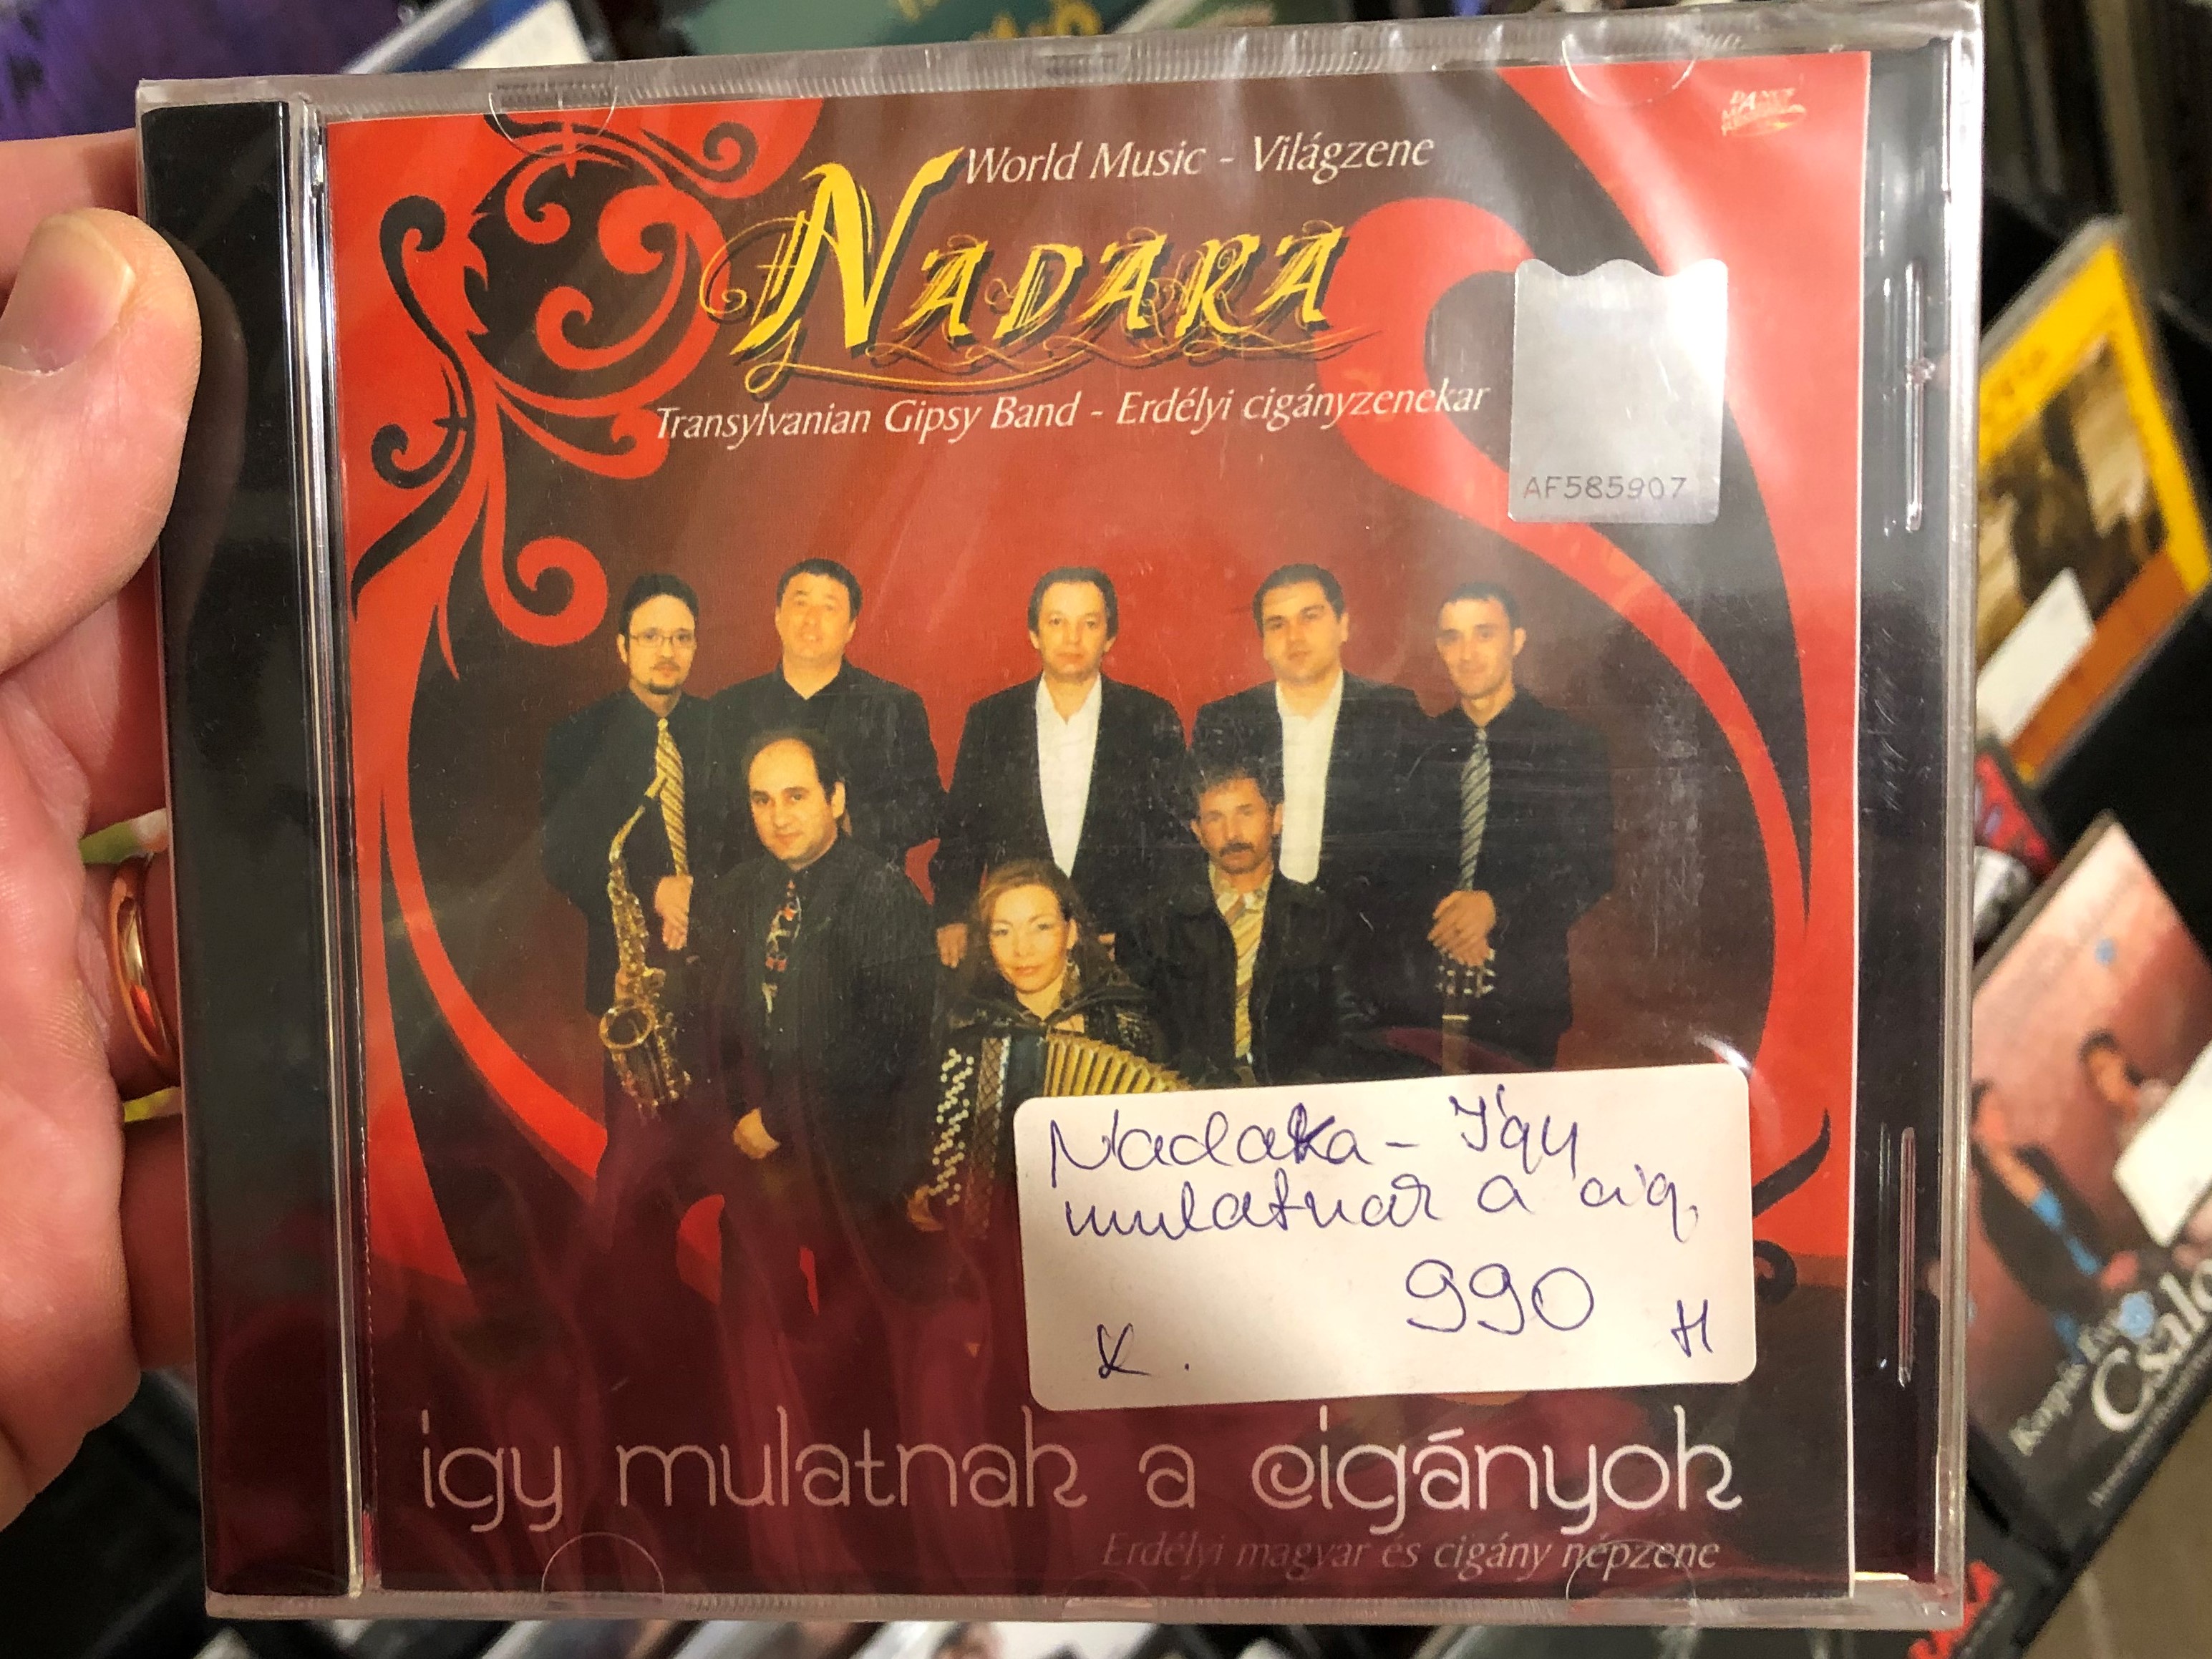 nadara-transylvanian-gipsy-band-erd-lyi-cig-nyzenekar-gy-mulattnak-a-cig-nyok-erd-lyi-magyar-s-cig-ny-n-pzene-dancs-market-records-audio-cd-2008-5999500036877-1-.jpg